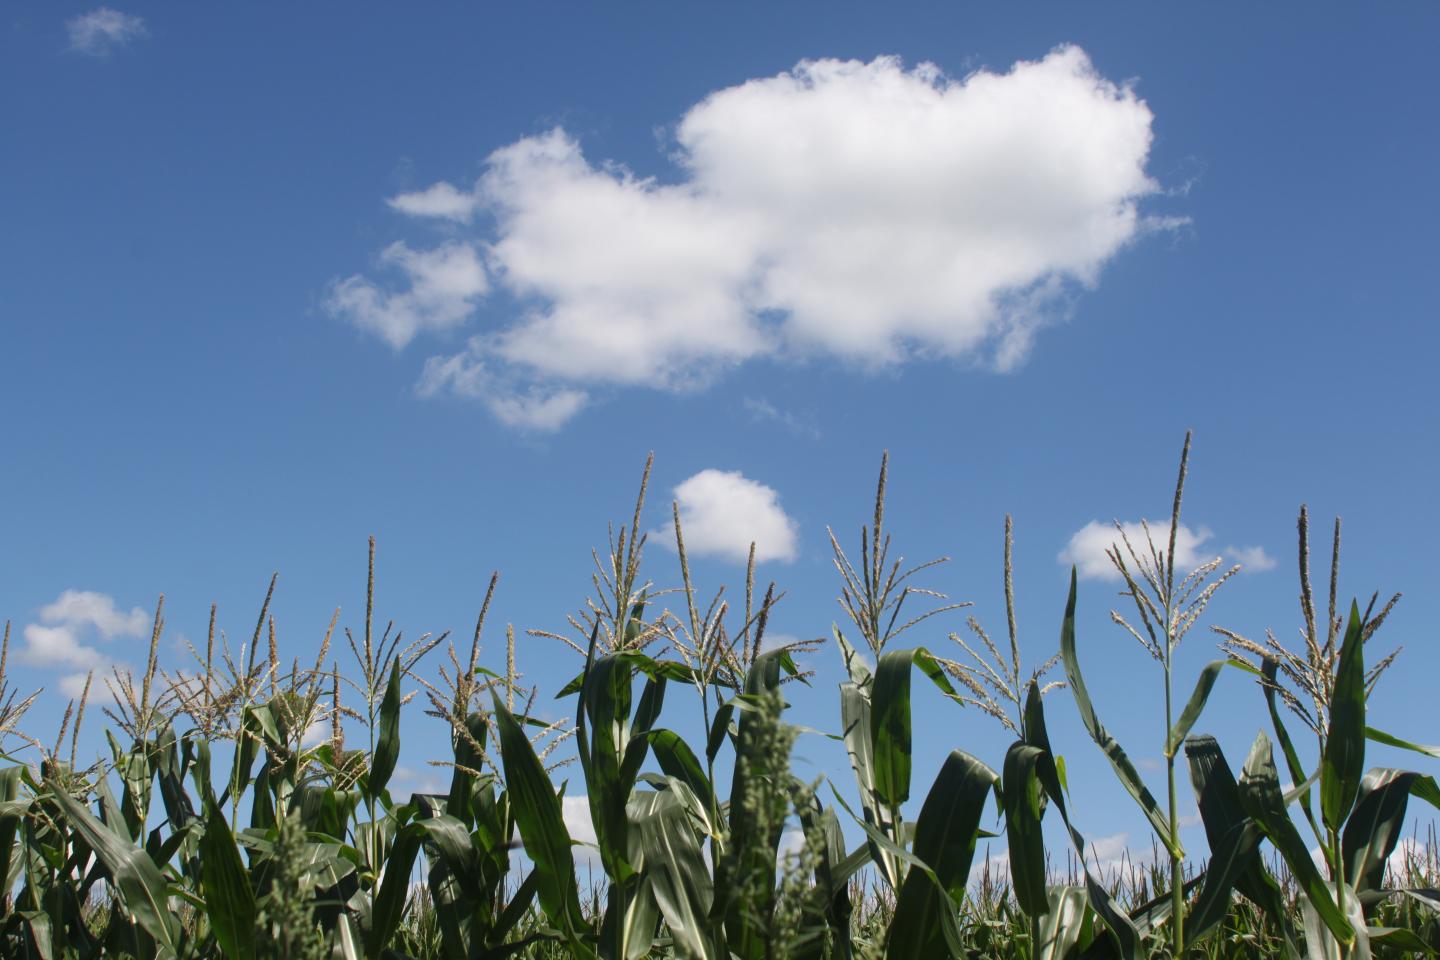 A Corn Field in Upstate New York